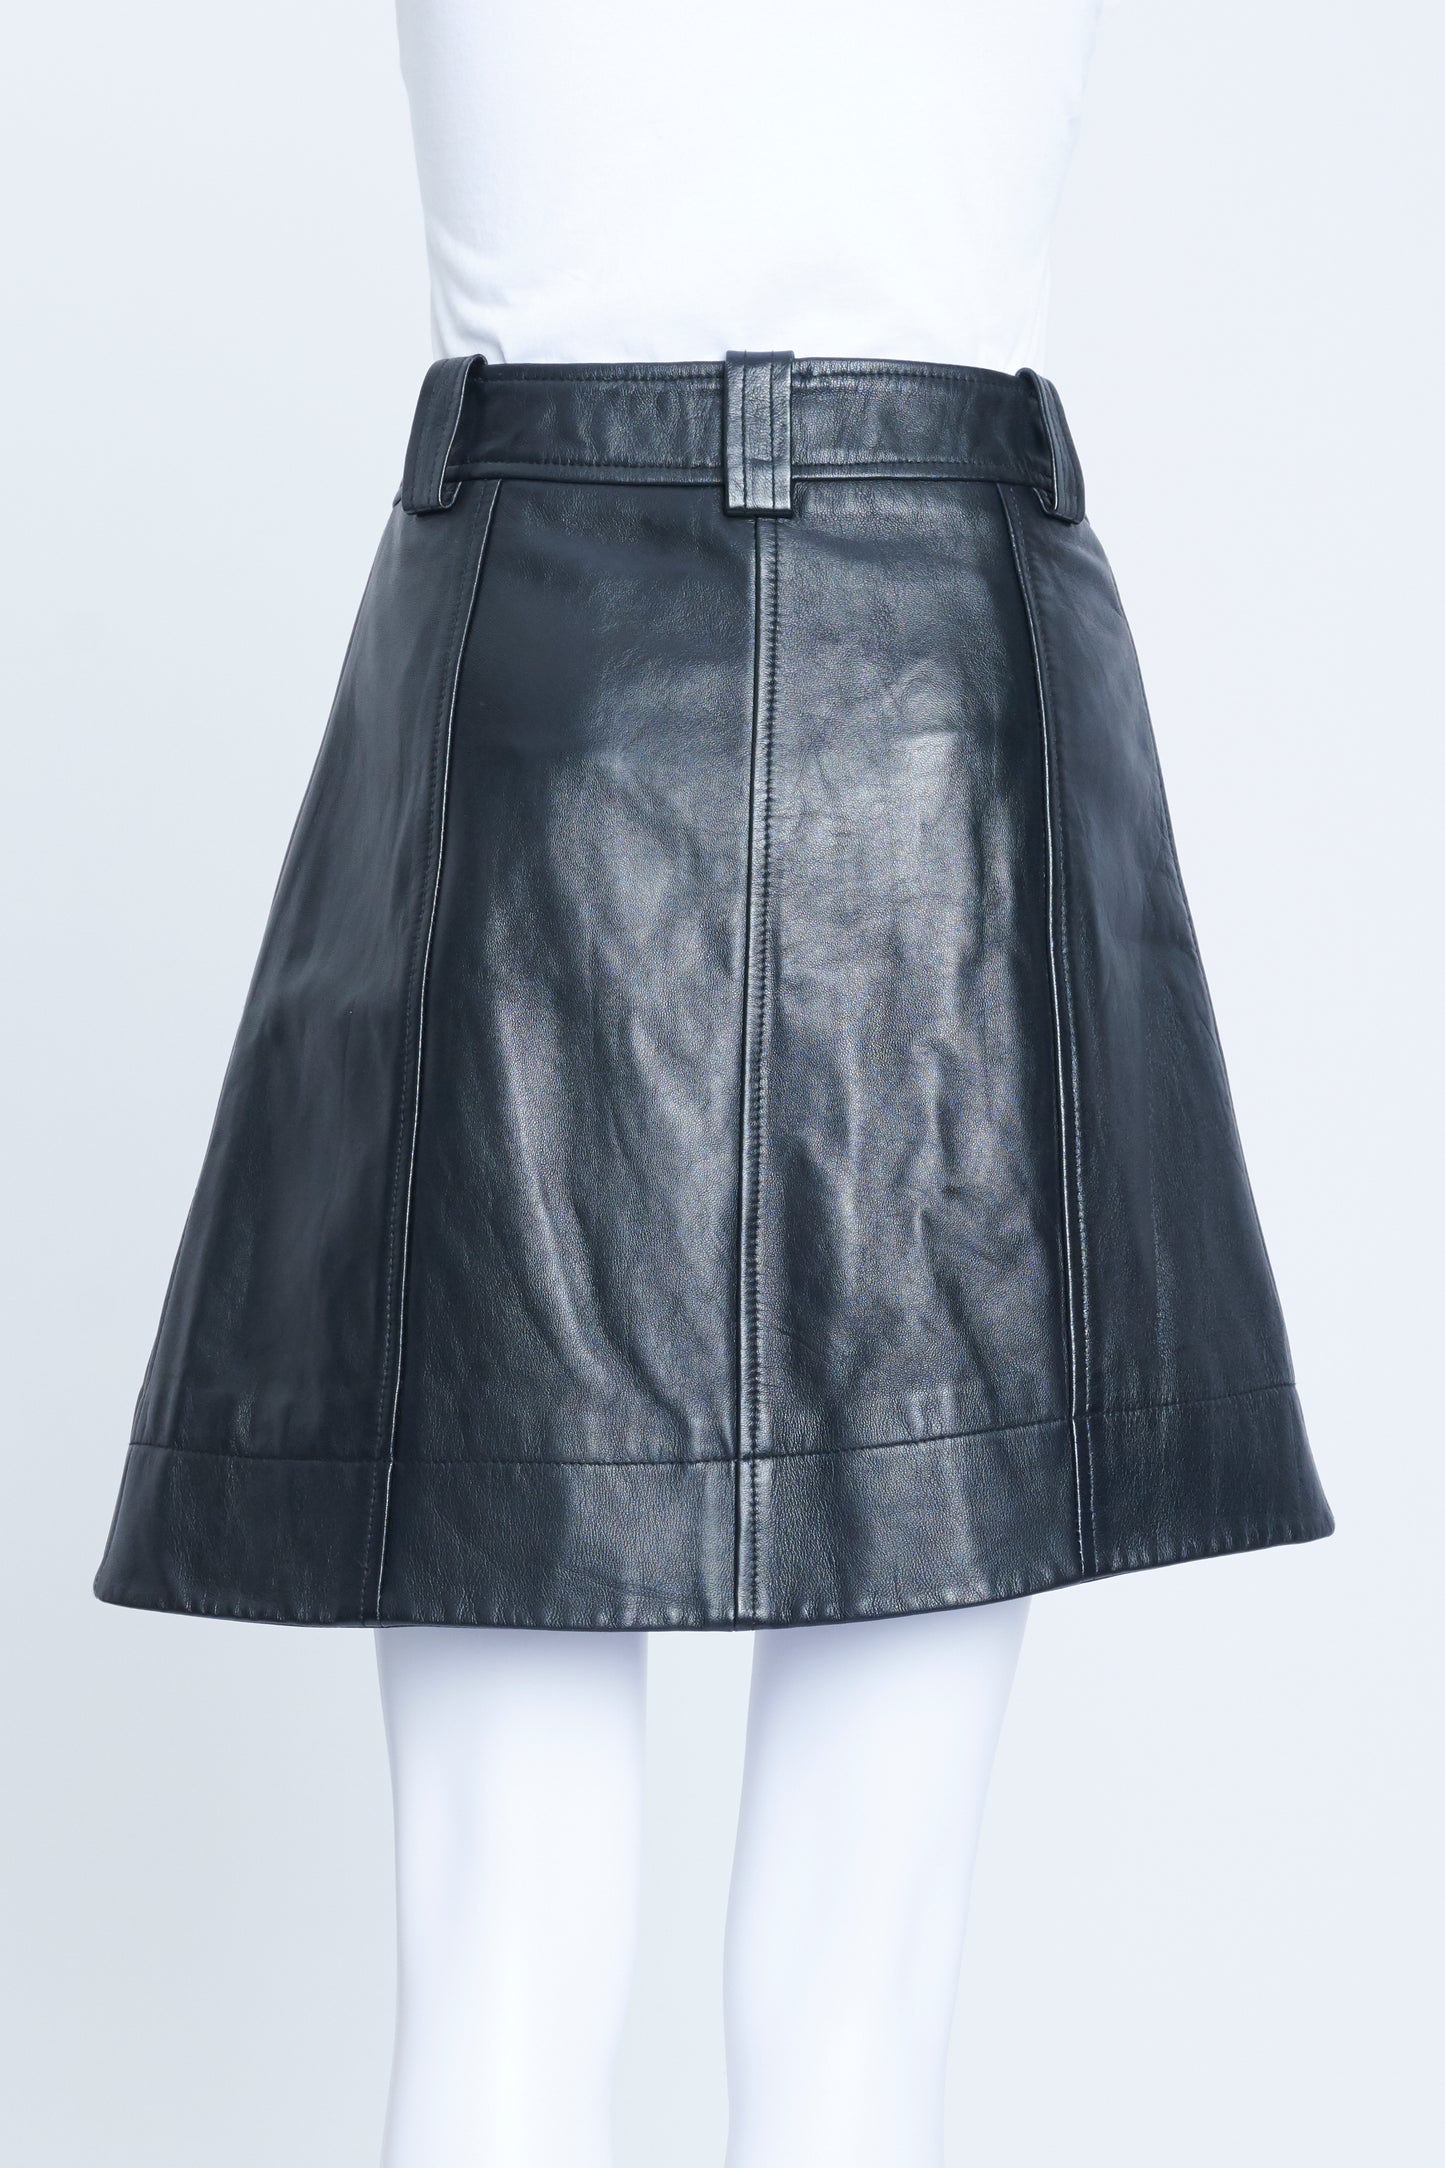 Black Leather Mini Skirt With Asymmetrical Button Closure